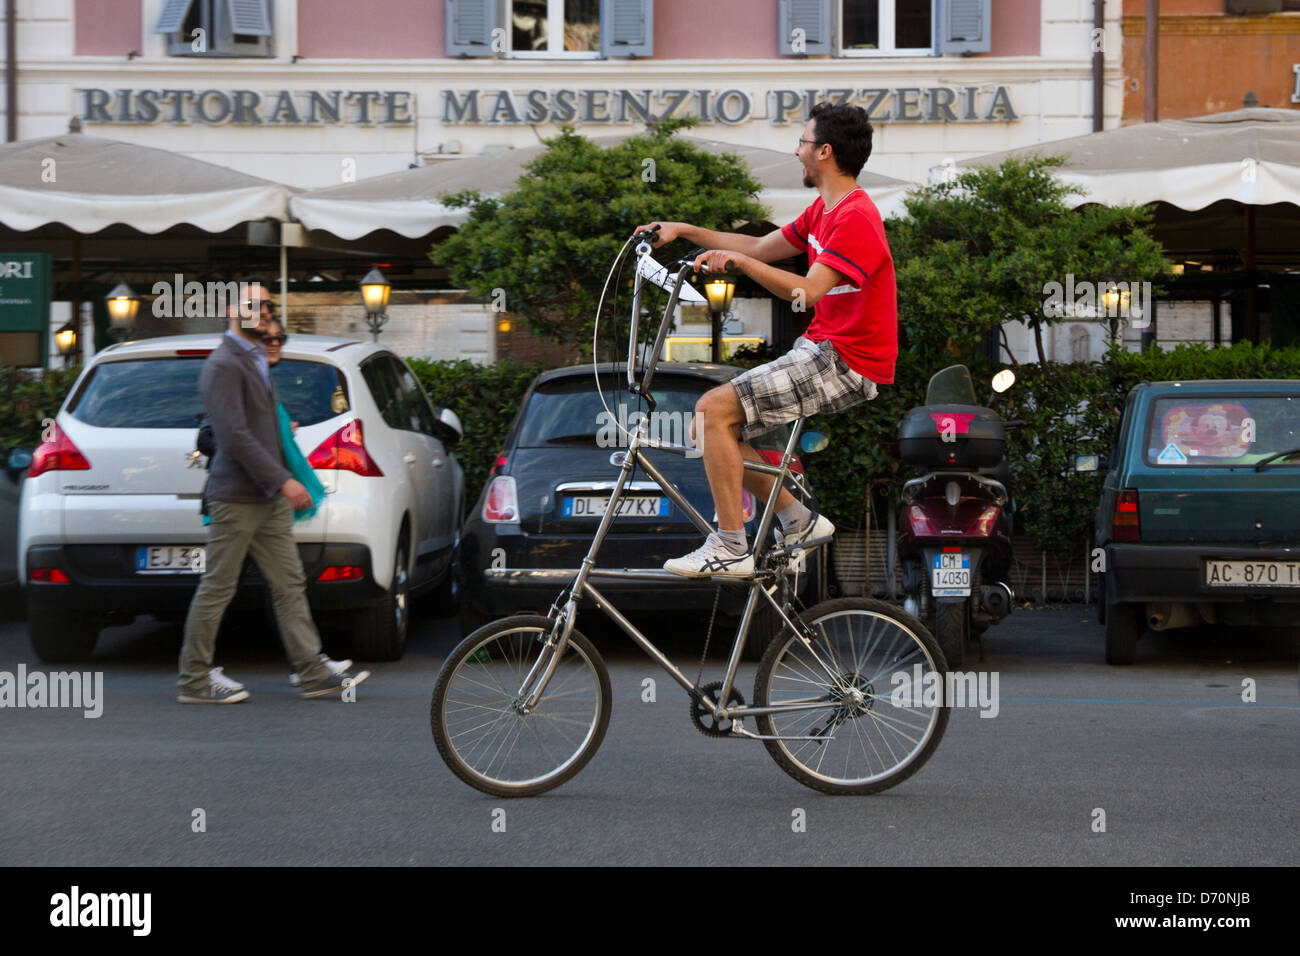 Funny bike -Fotos und -Bildmaterial in hoher Auflösung – Alamy